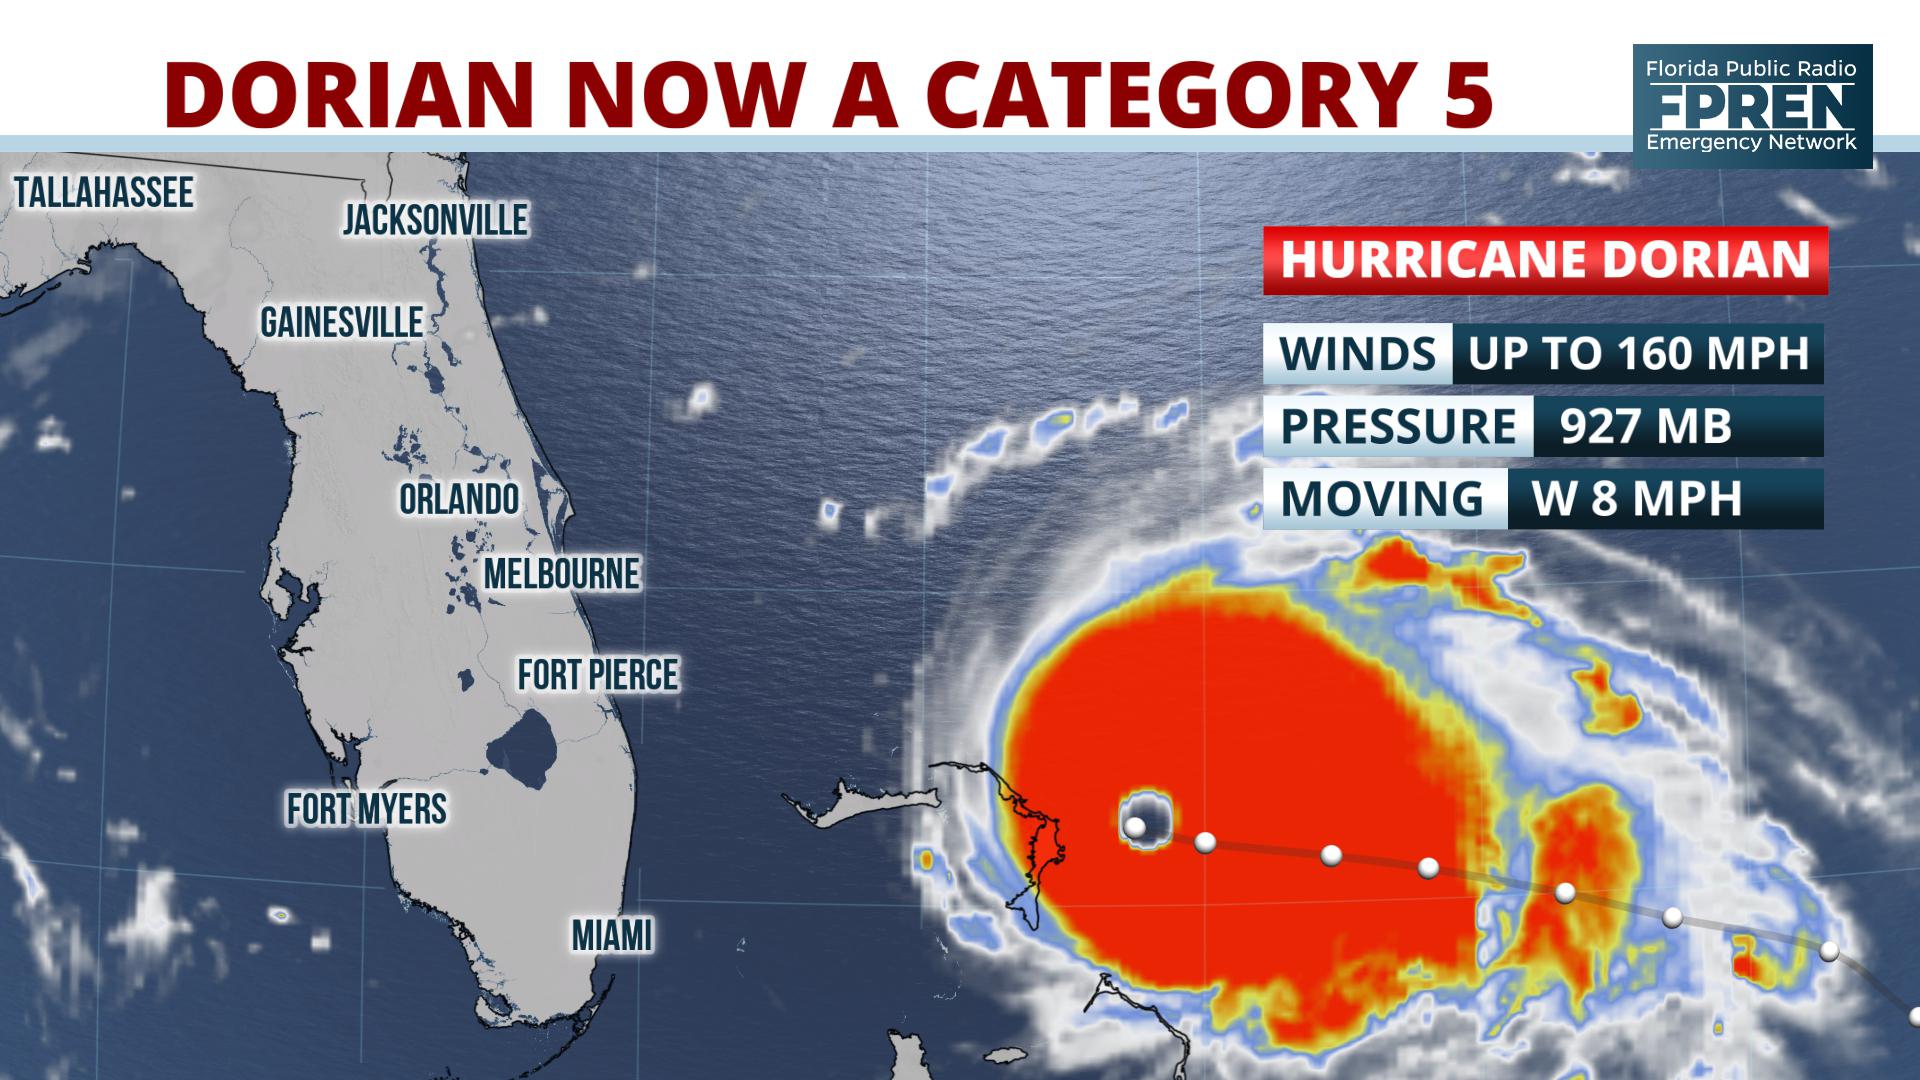 Hurricane Ian will hit Florida as a major storm, forecasters say : NPR